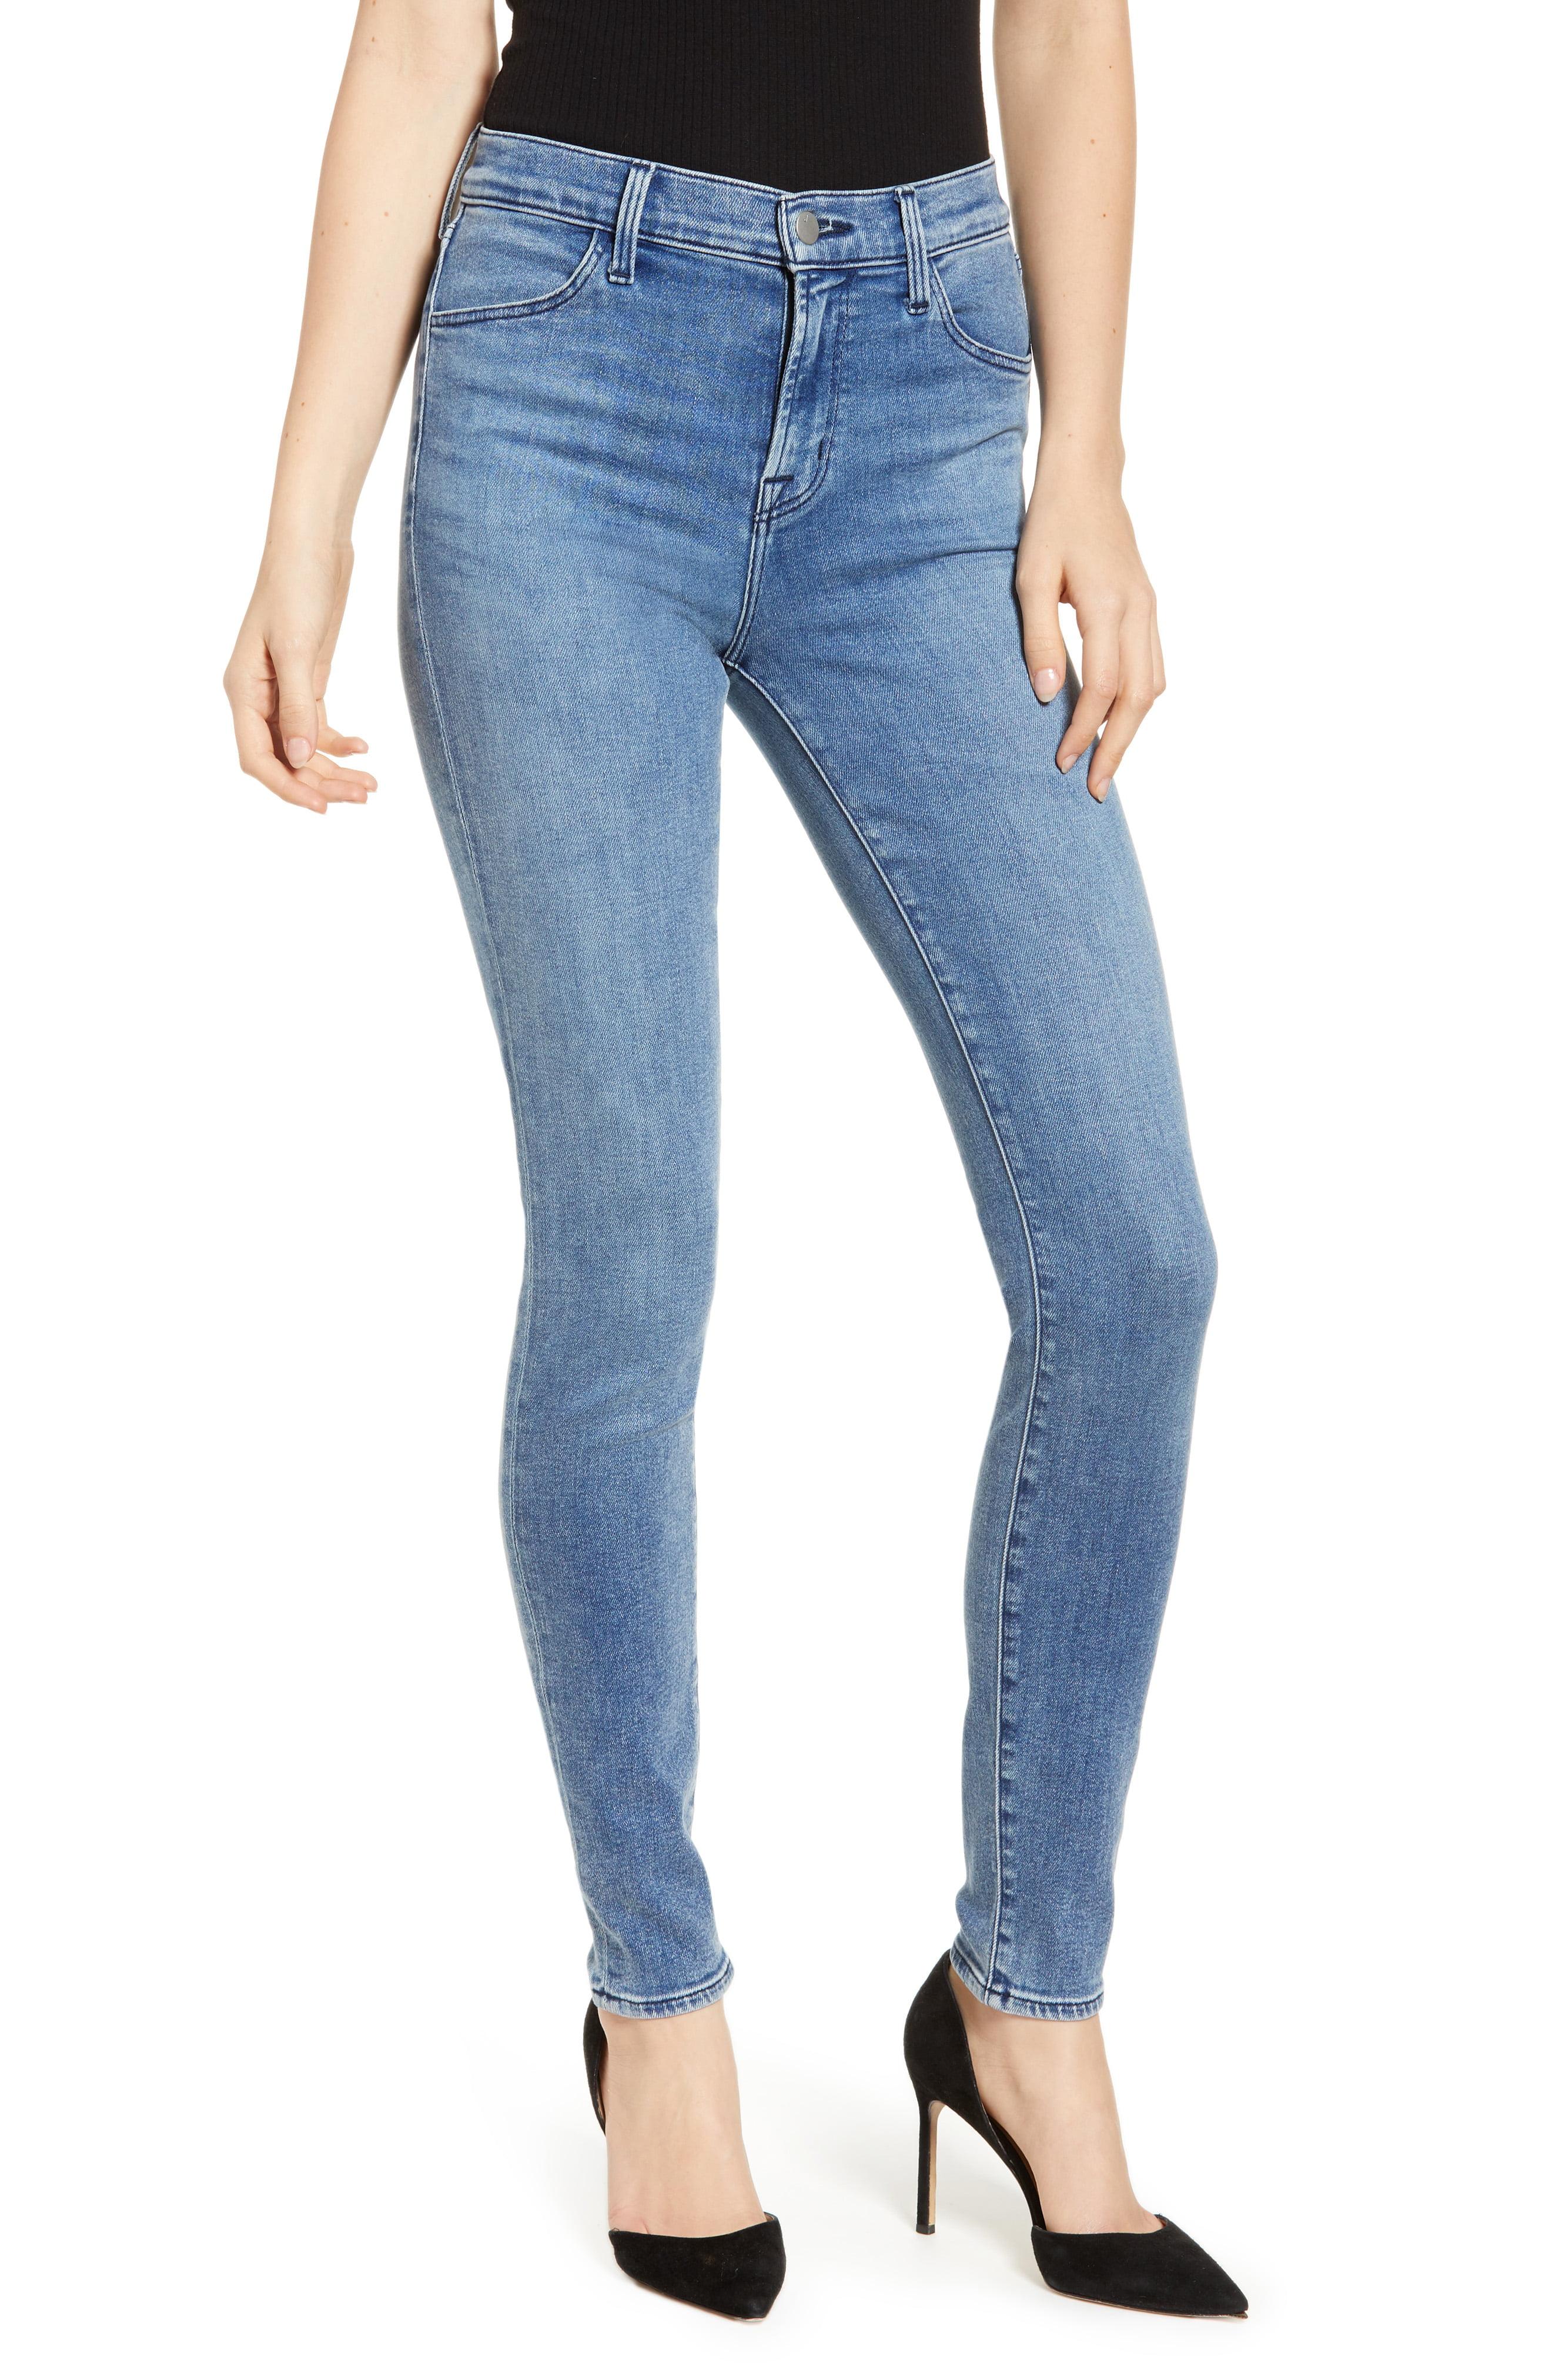 J Brand Maria High Waist Skinny Jeans in Blue - Lyst